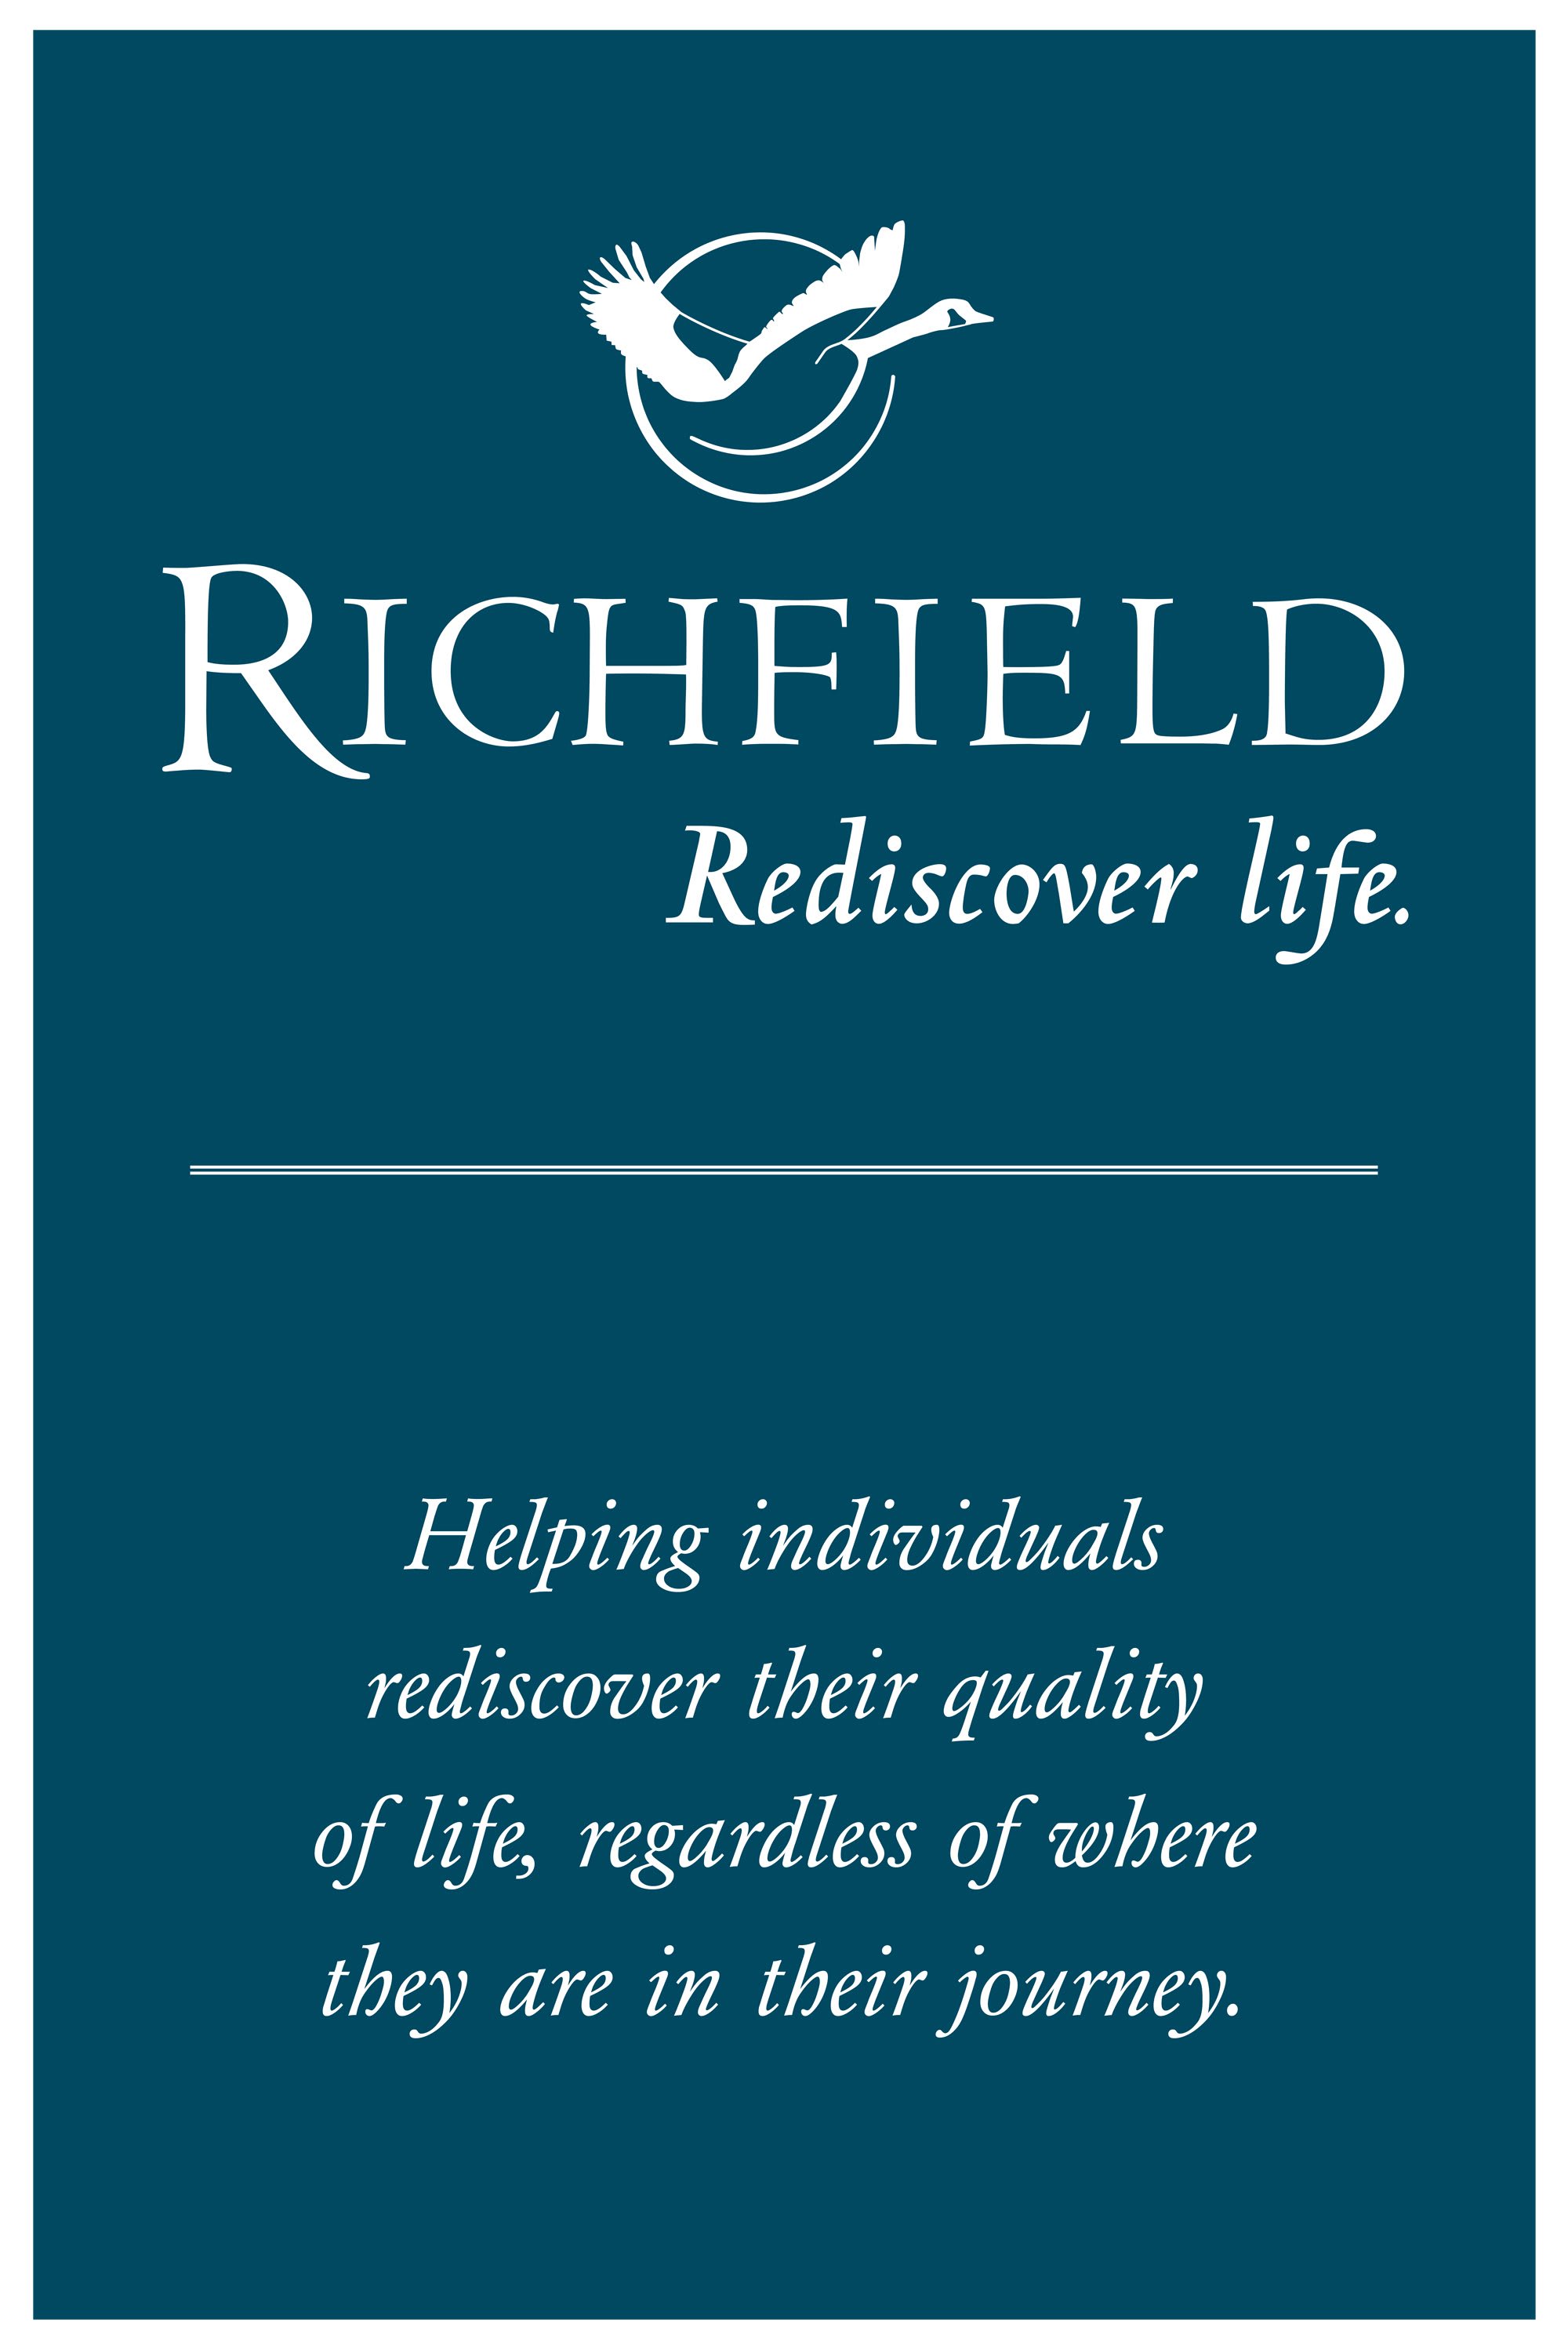 Photo of Richfield Living